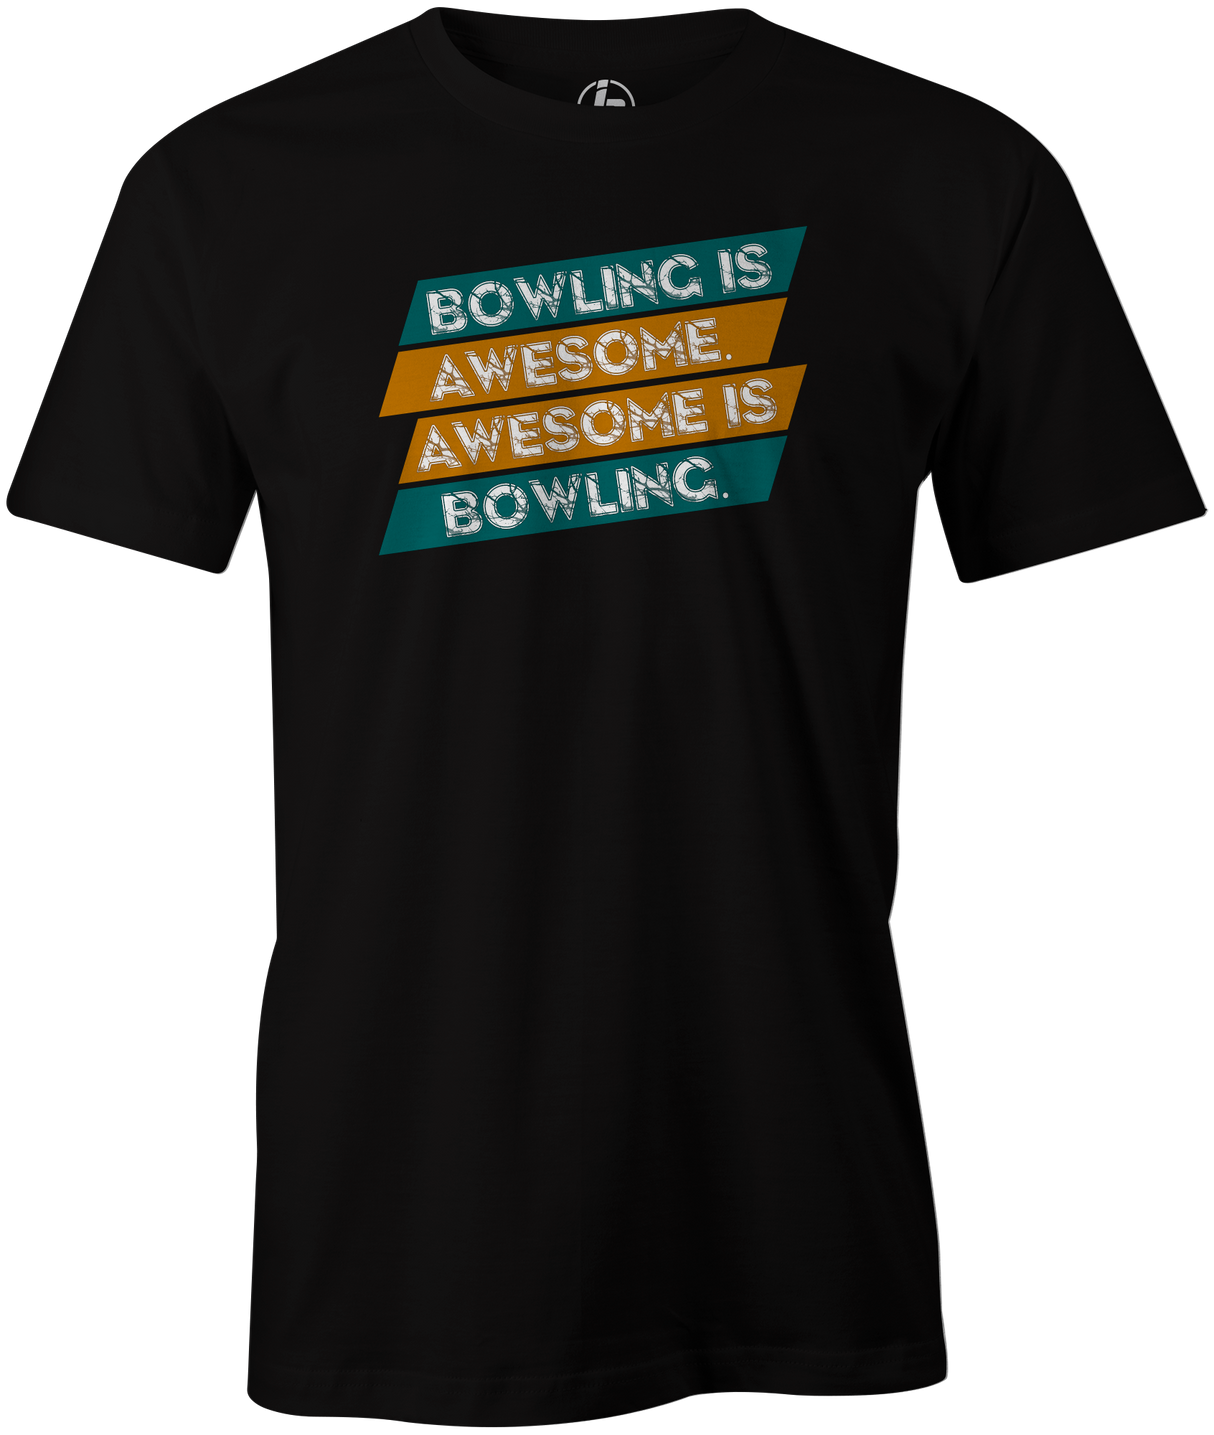 Bowling Is Awesome Men's T-shirt, Black, cool, funny, tshirt, tee, tee shirt, tee-shirt, league bowling, team bowling, ebonite, hammer, track, columbia 300, storm, roto grip, brunswick, radical, dv8, motiv.